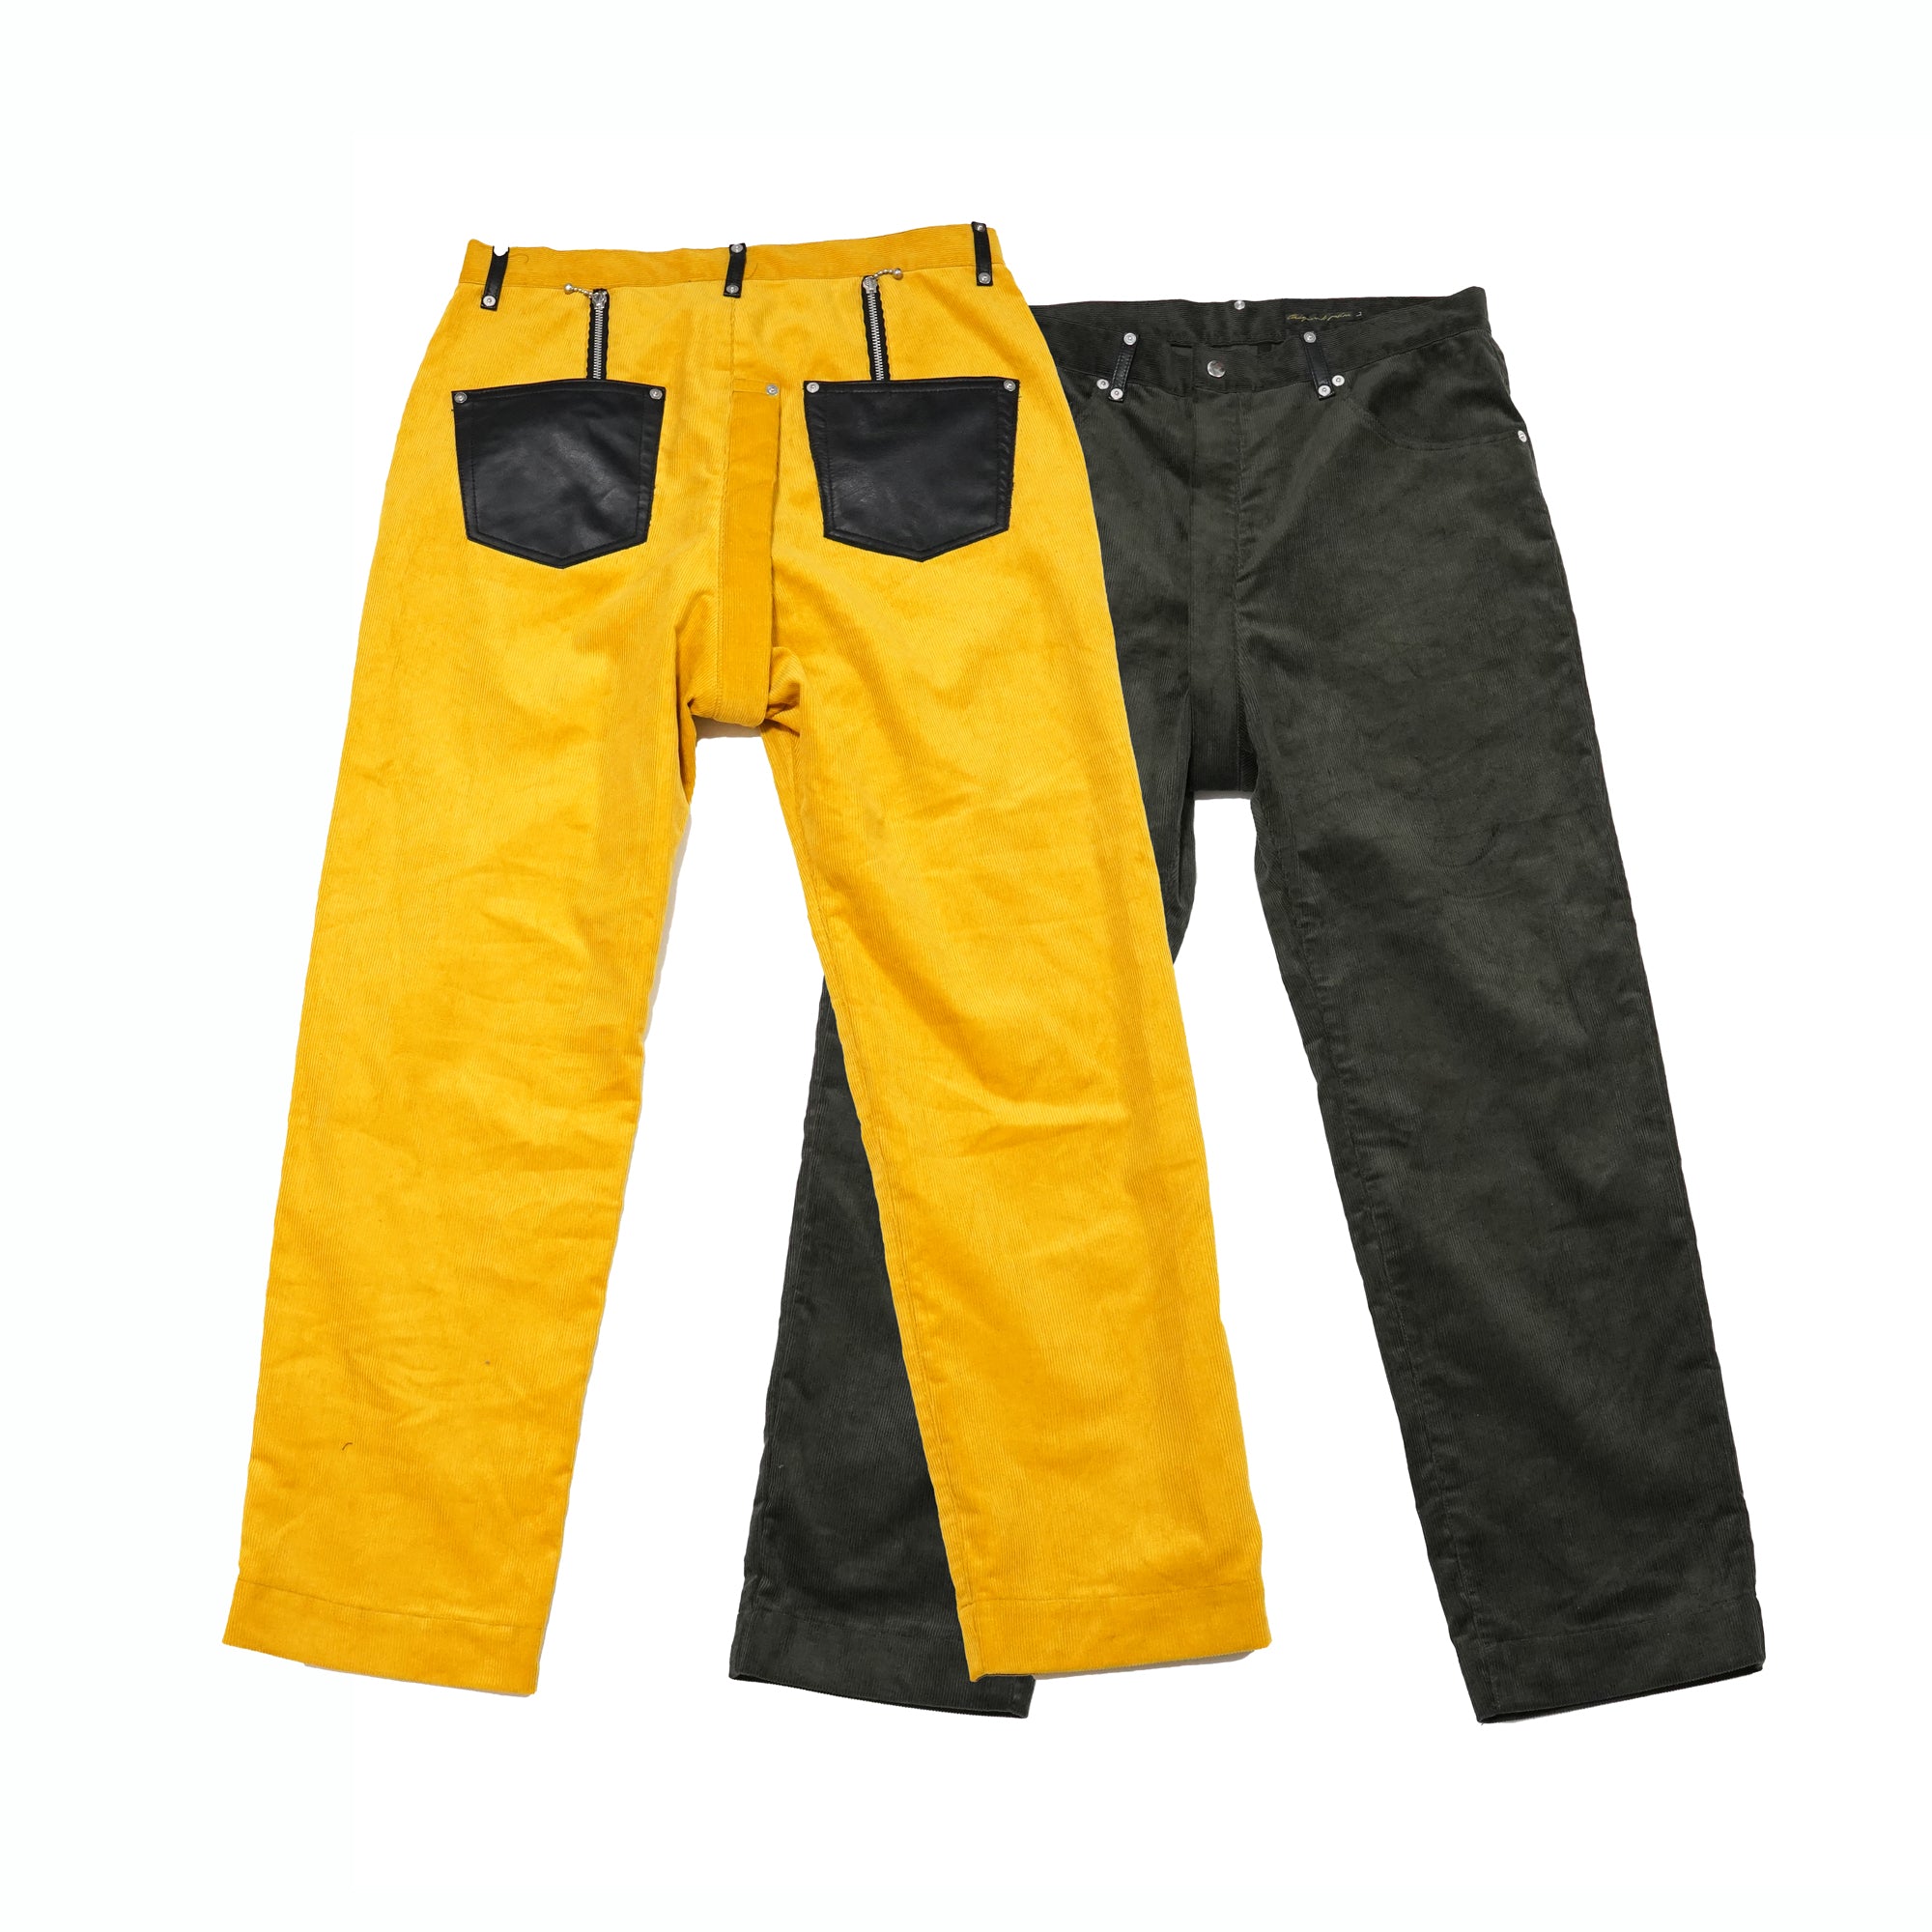 No:PT423 | Name:Relaxing Punky Trousers | Color:Mustard/Deep Green | Size:M/L【ORGINALJOHN】【入荷予定アイテム・入荷連絡可能】-ORIGINAL JOHN-ADDICTION FUKUOKA